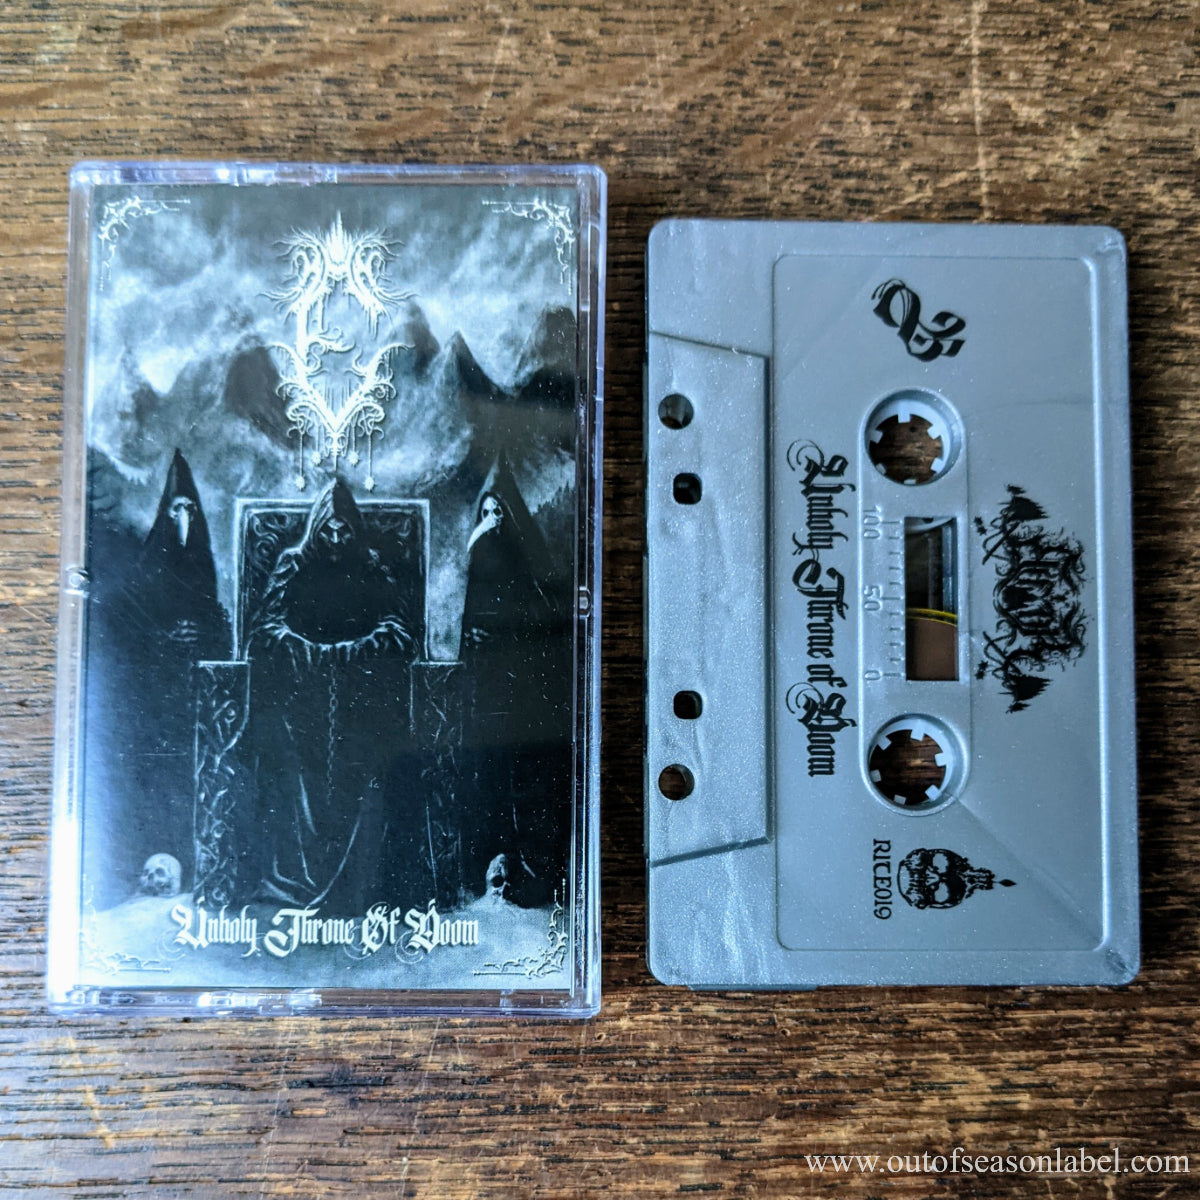 [SOLD OUT] ELFFOR "Unholy Throne of Doom" Cassette Tape (Lim. 100)